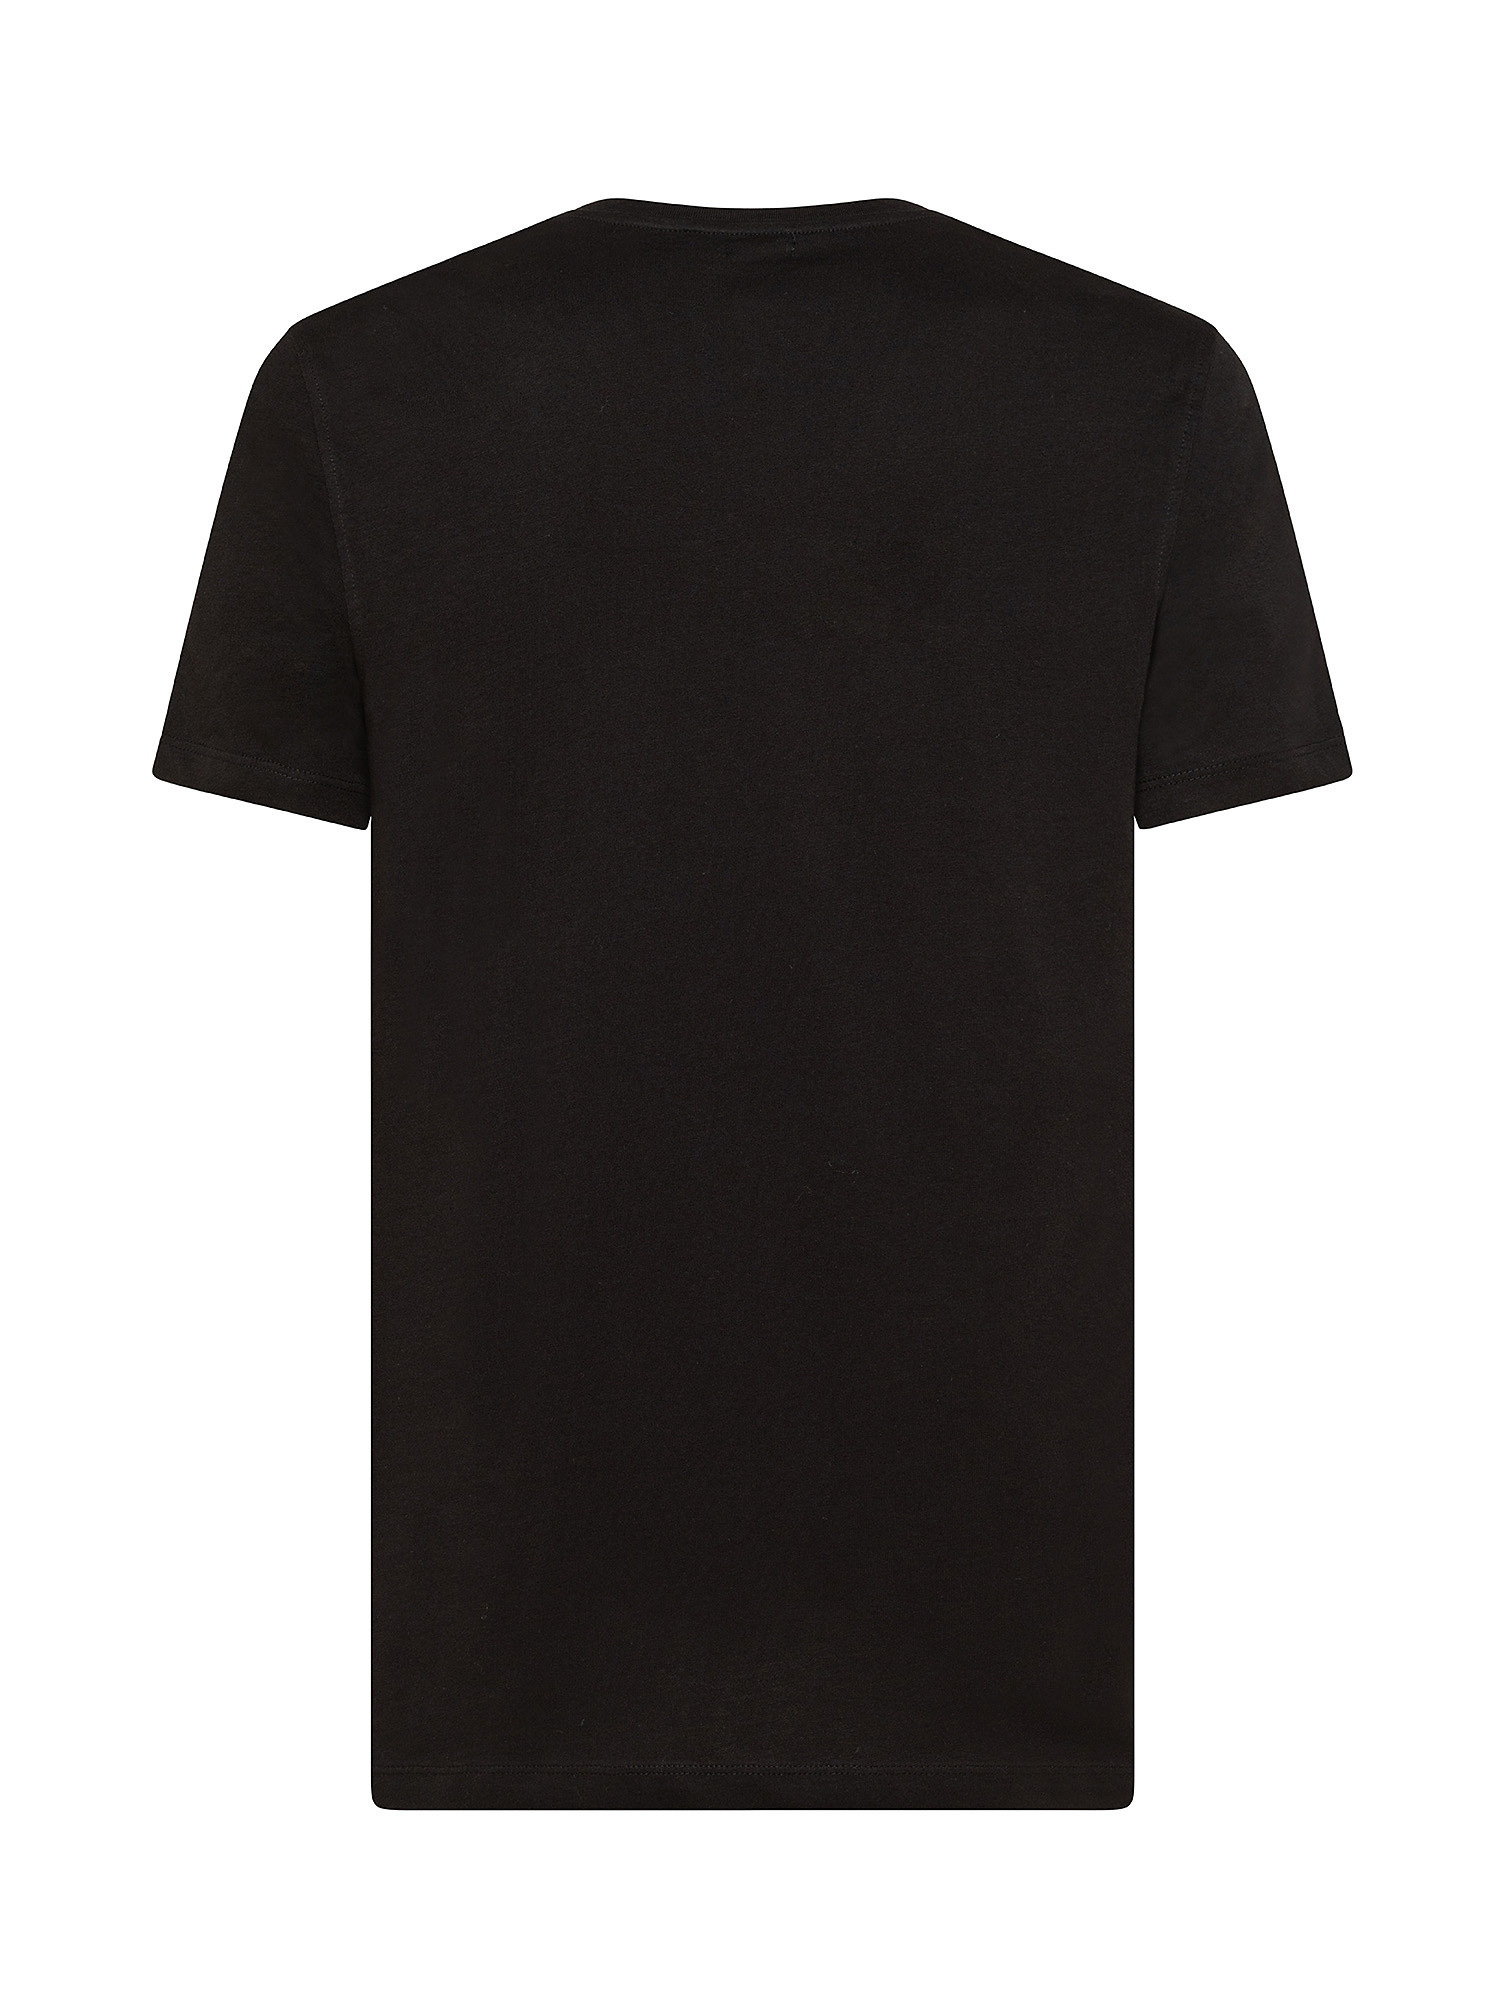 Luca D'Altieri - T-shirt scollo a V cotone supima, Nero, large image number 1